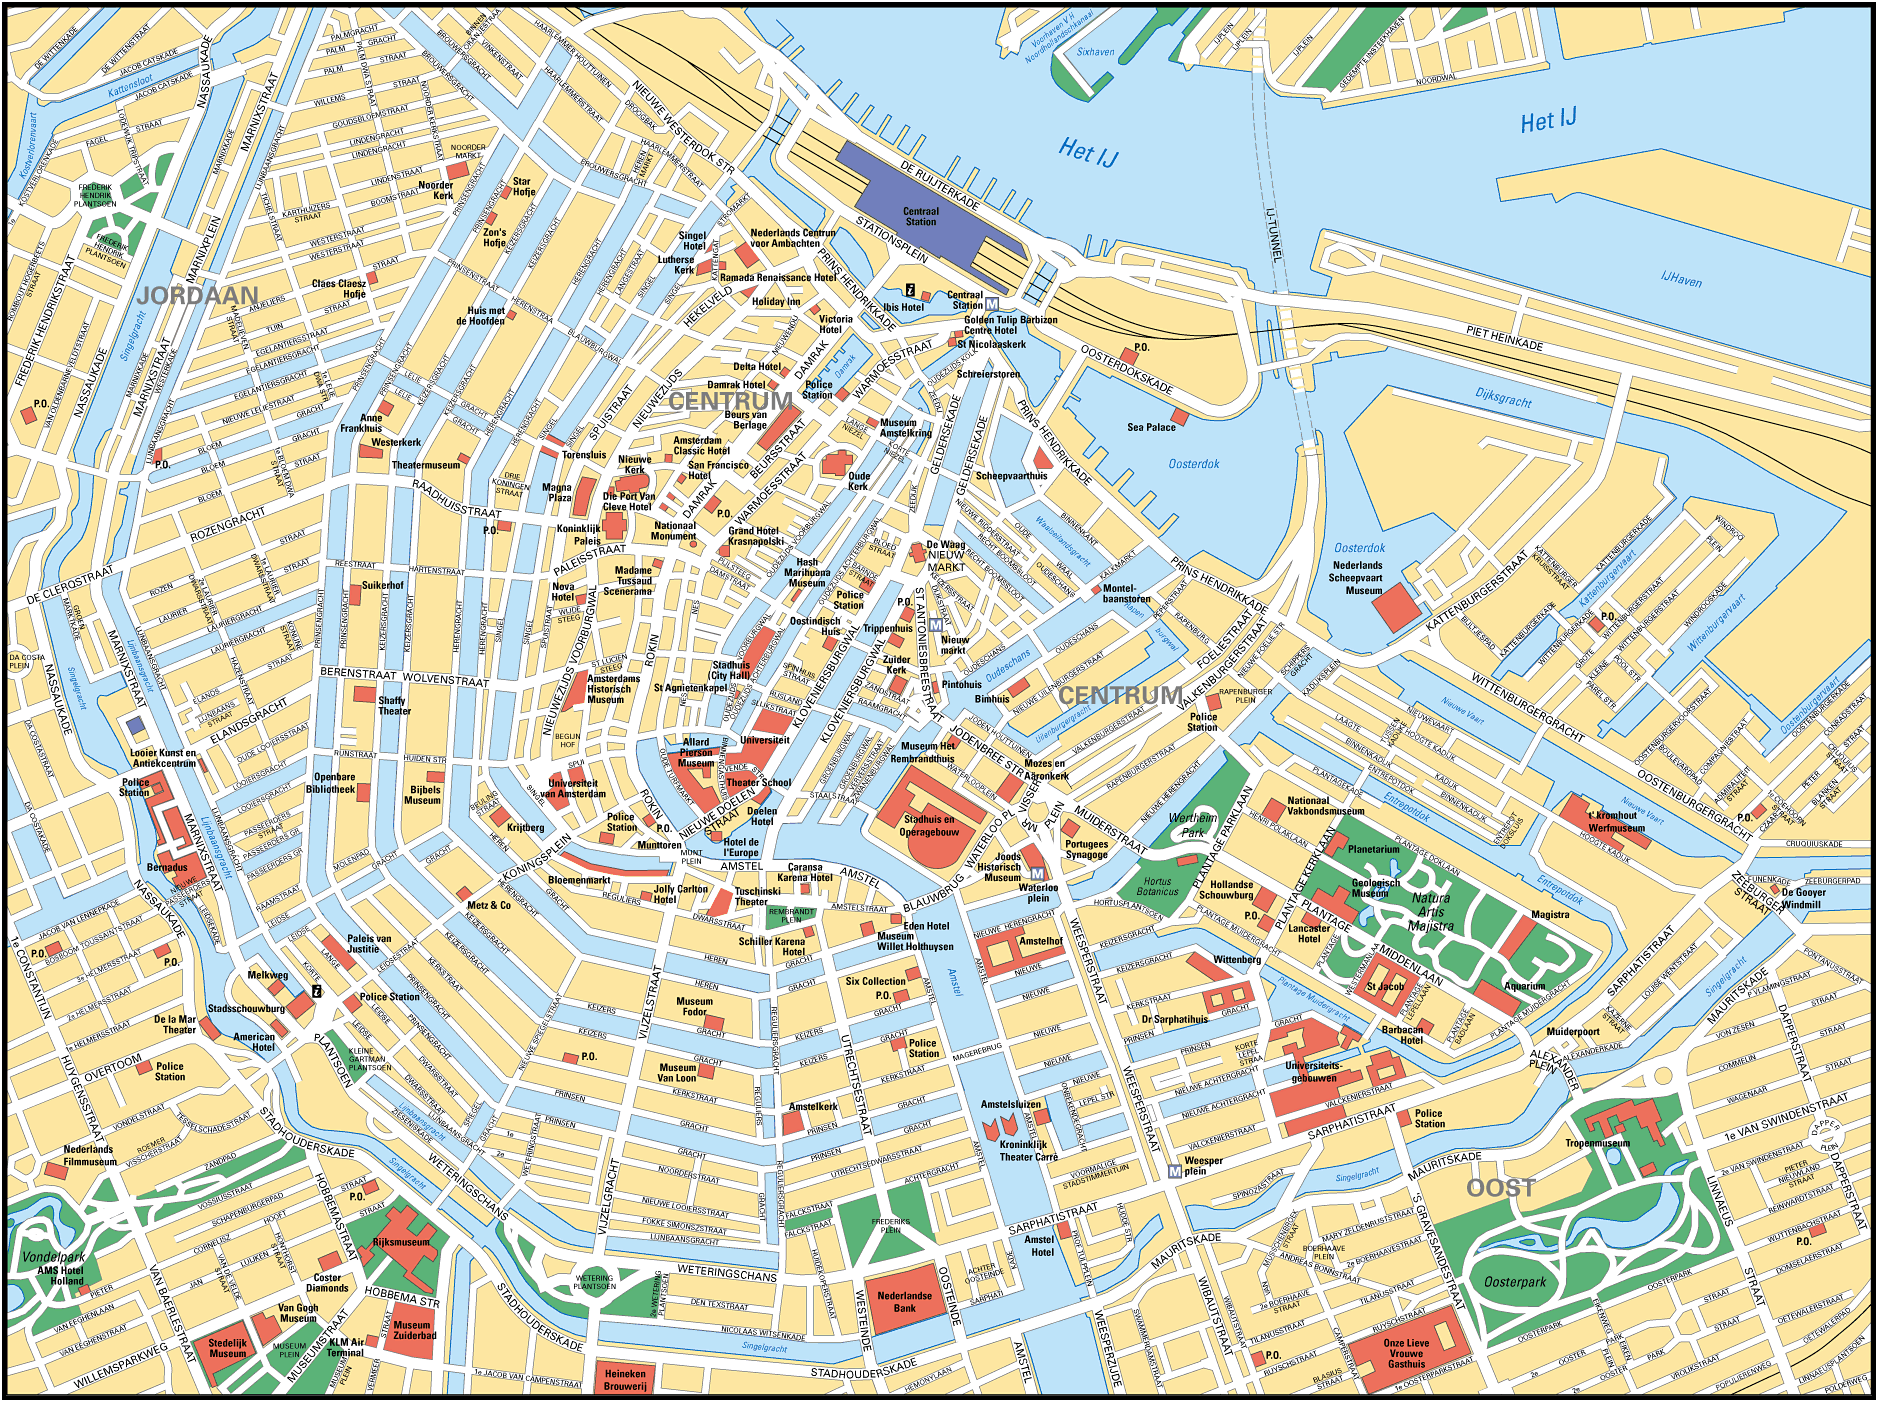 Map of Amsterdam. City maps of Netherlands — Planetolog.com